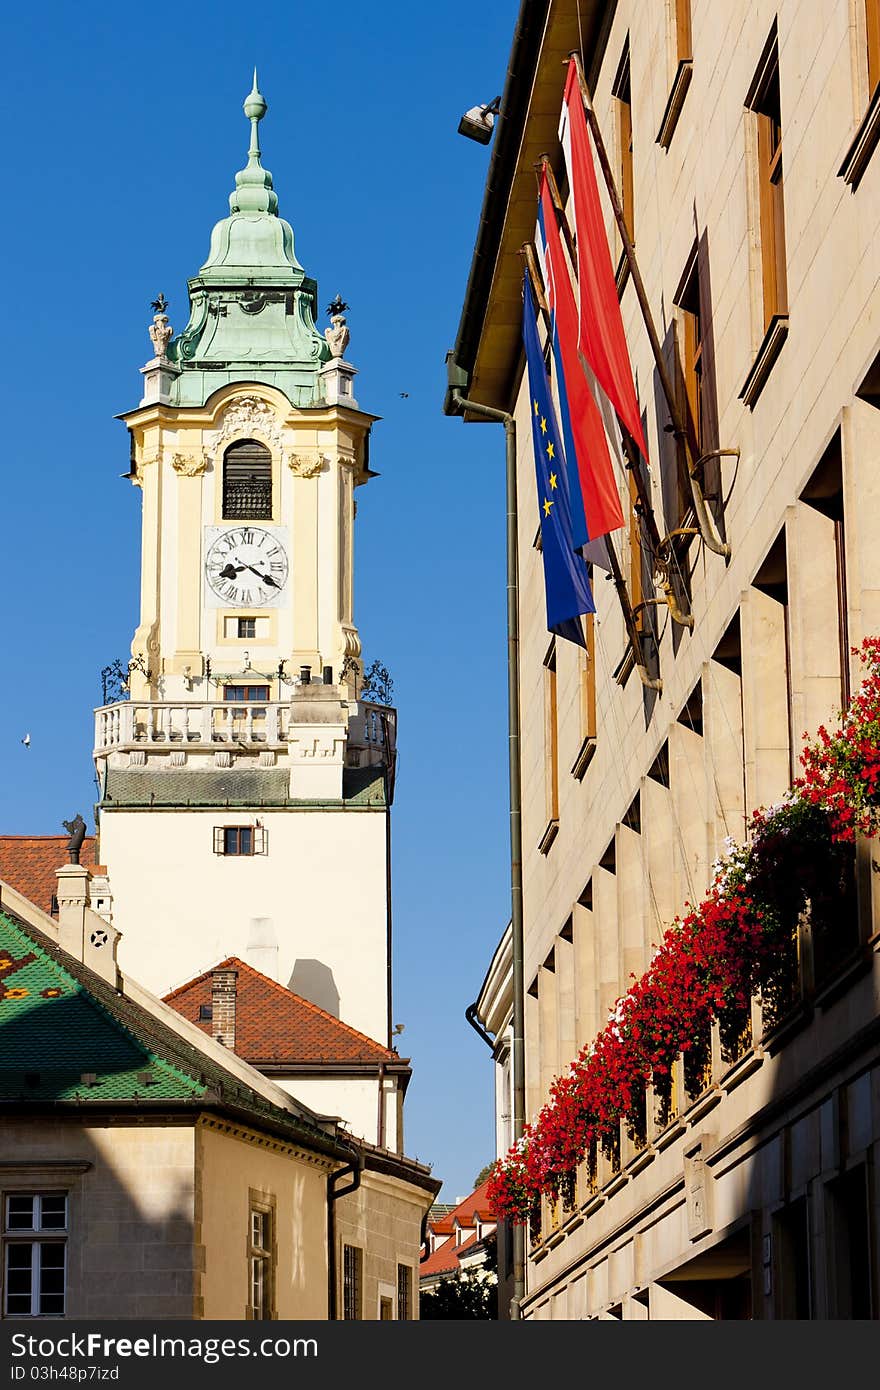 Old Town hall in Bratislava, Slovakia